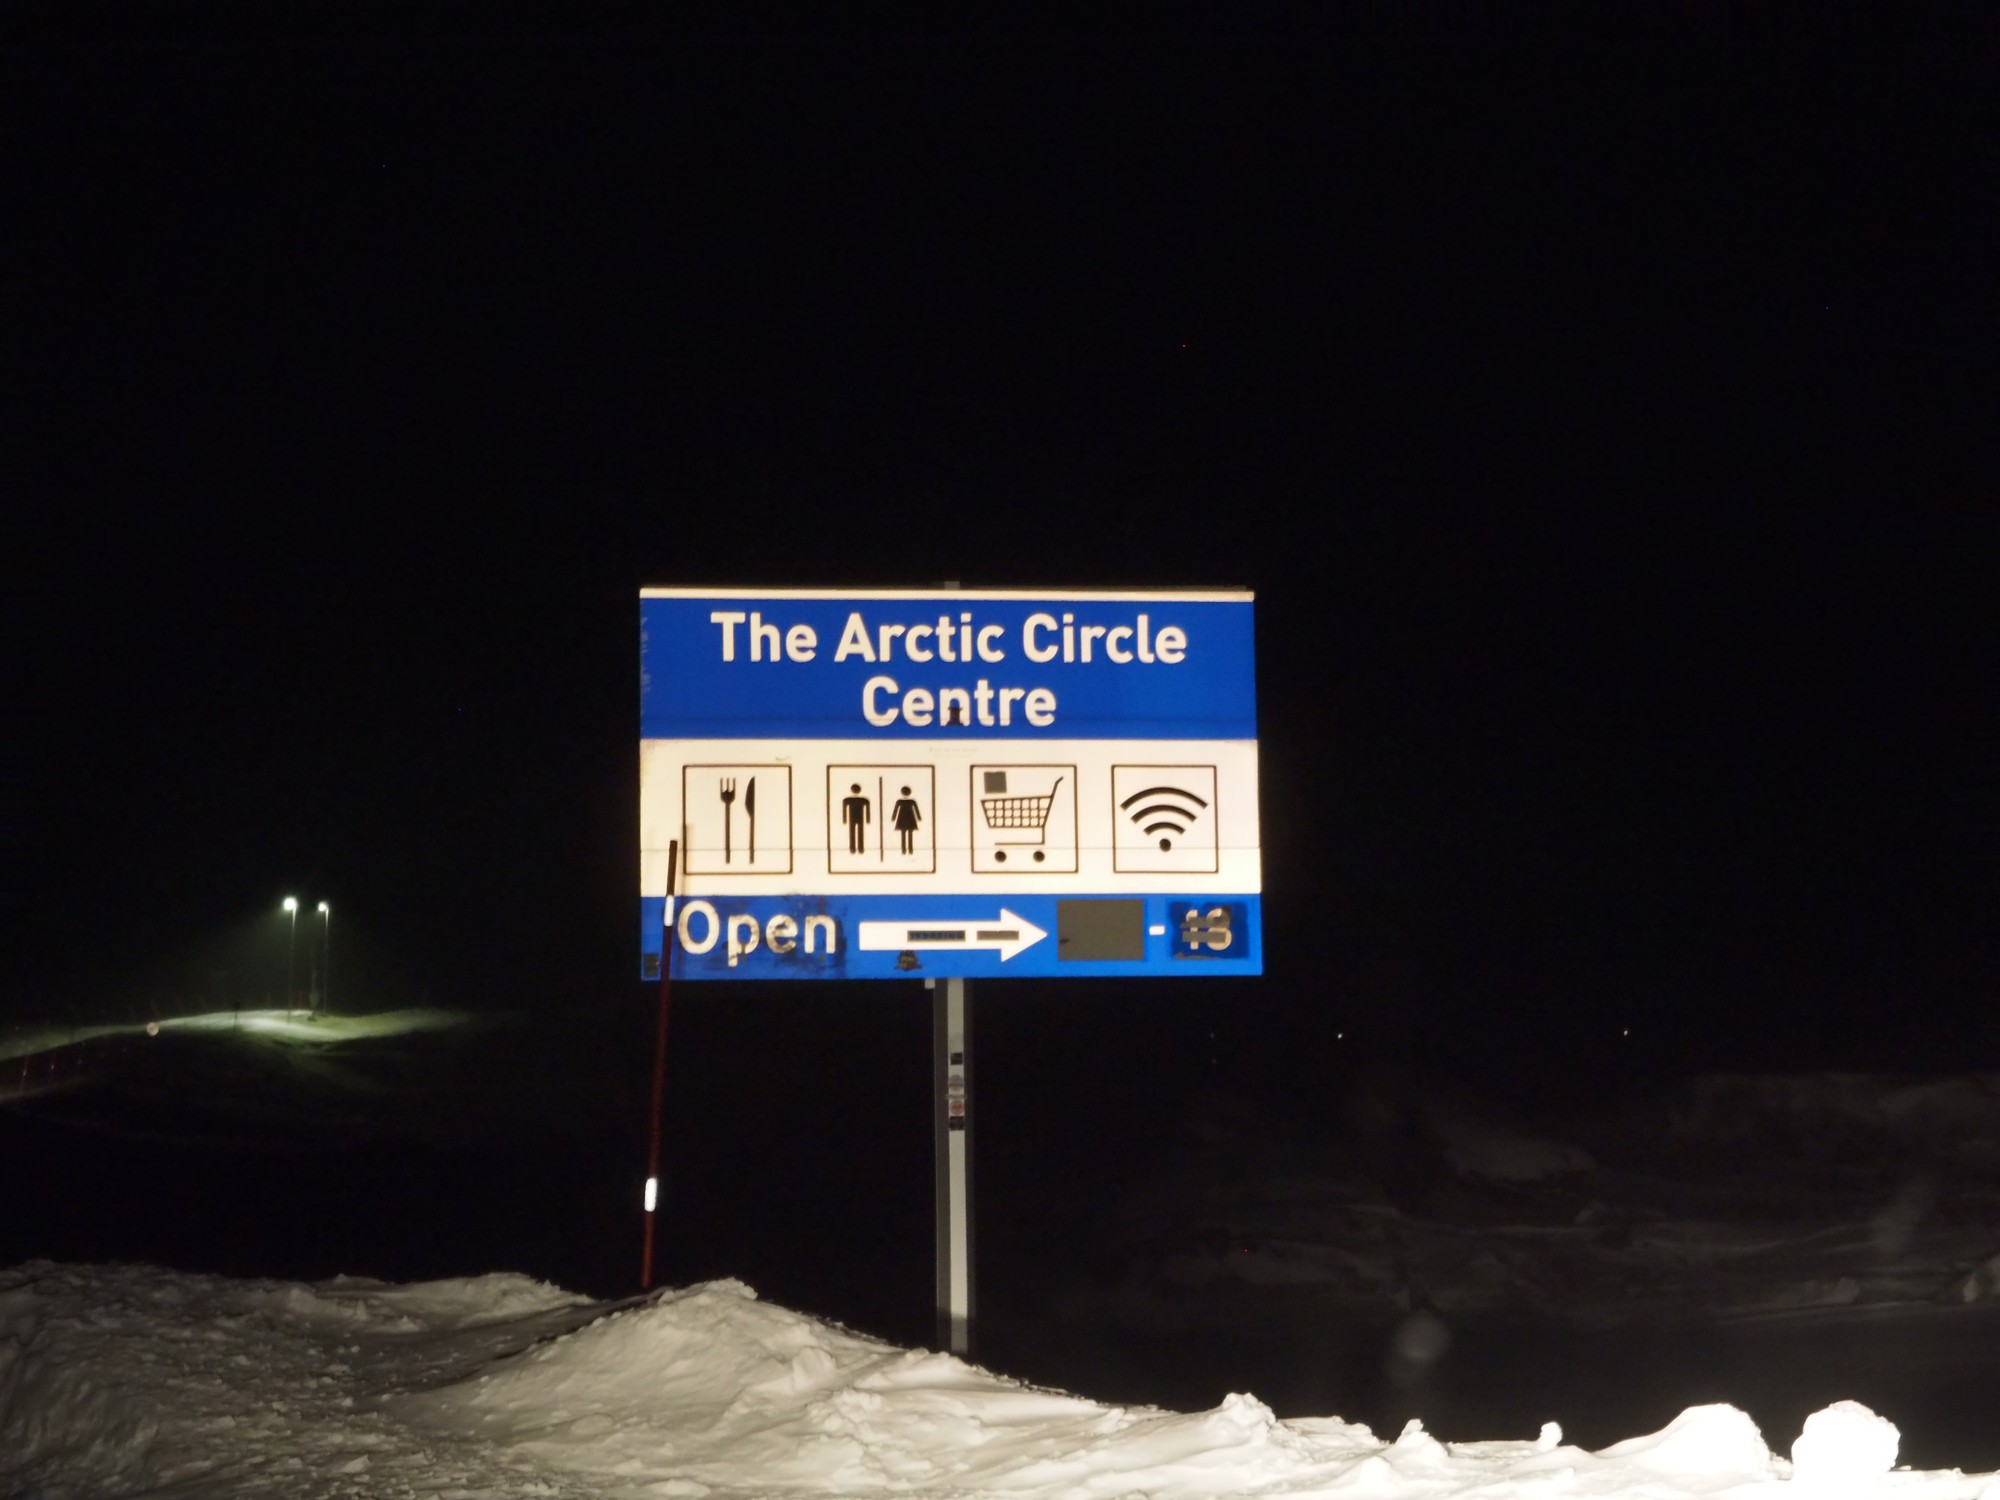 The Arctic Circle Centre